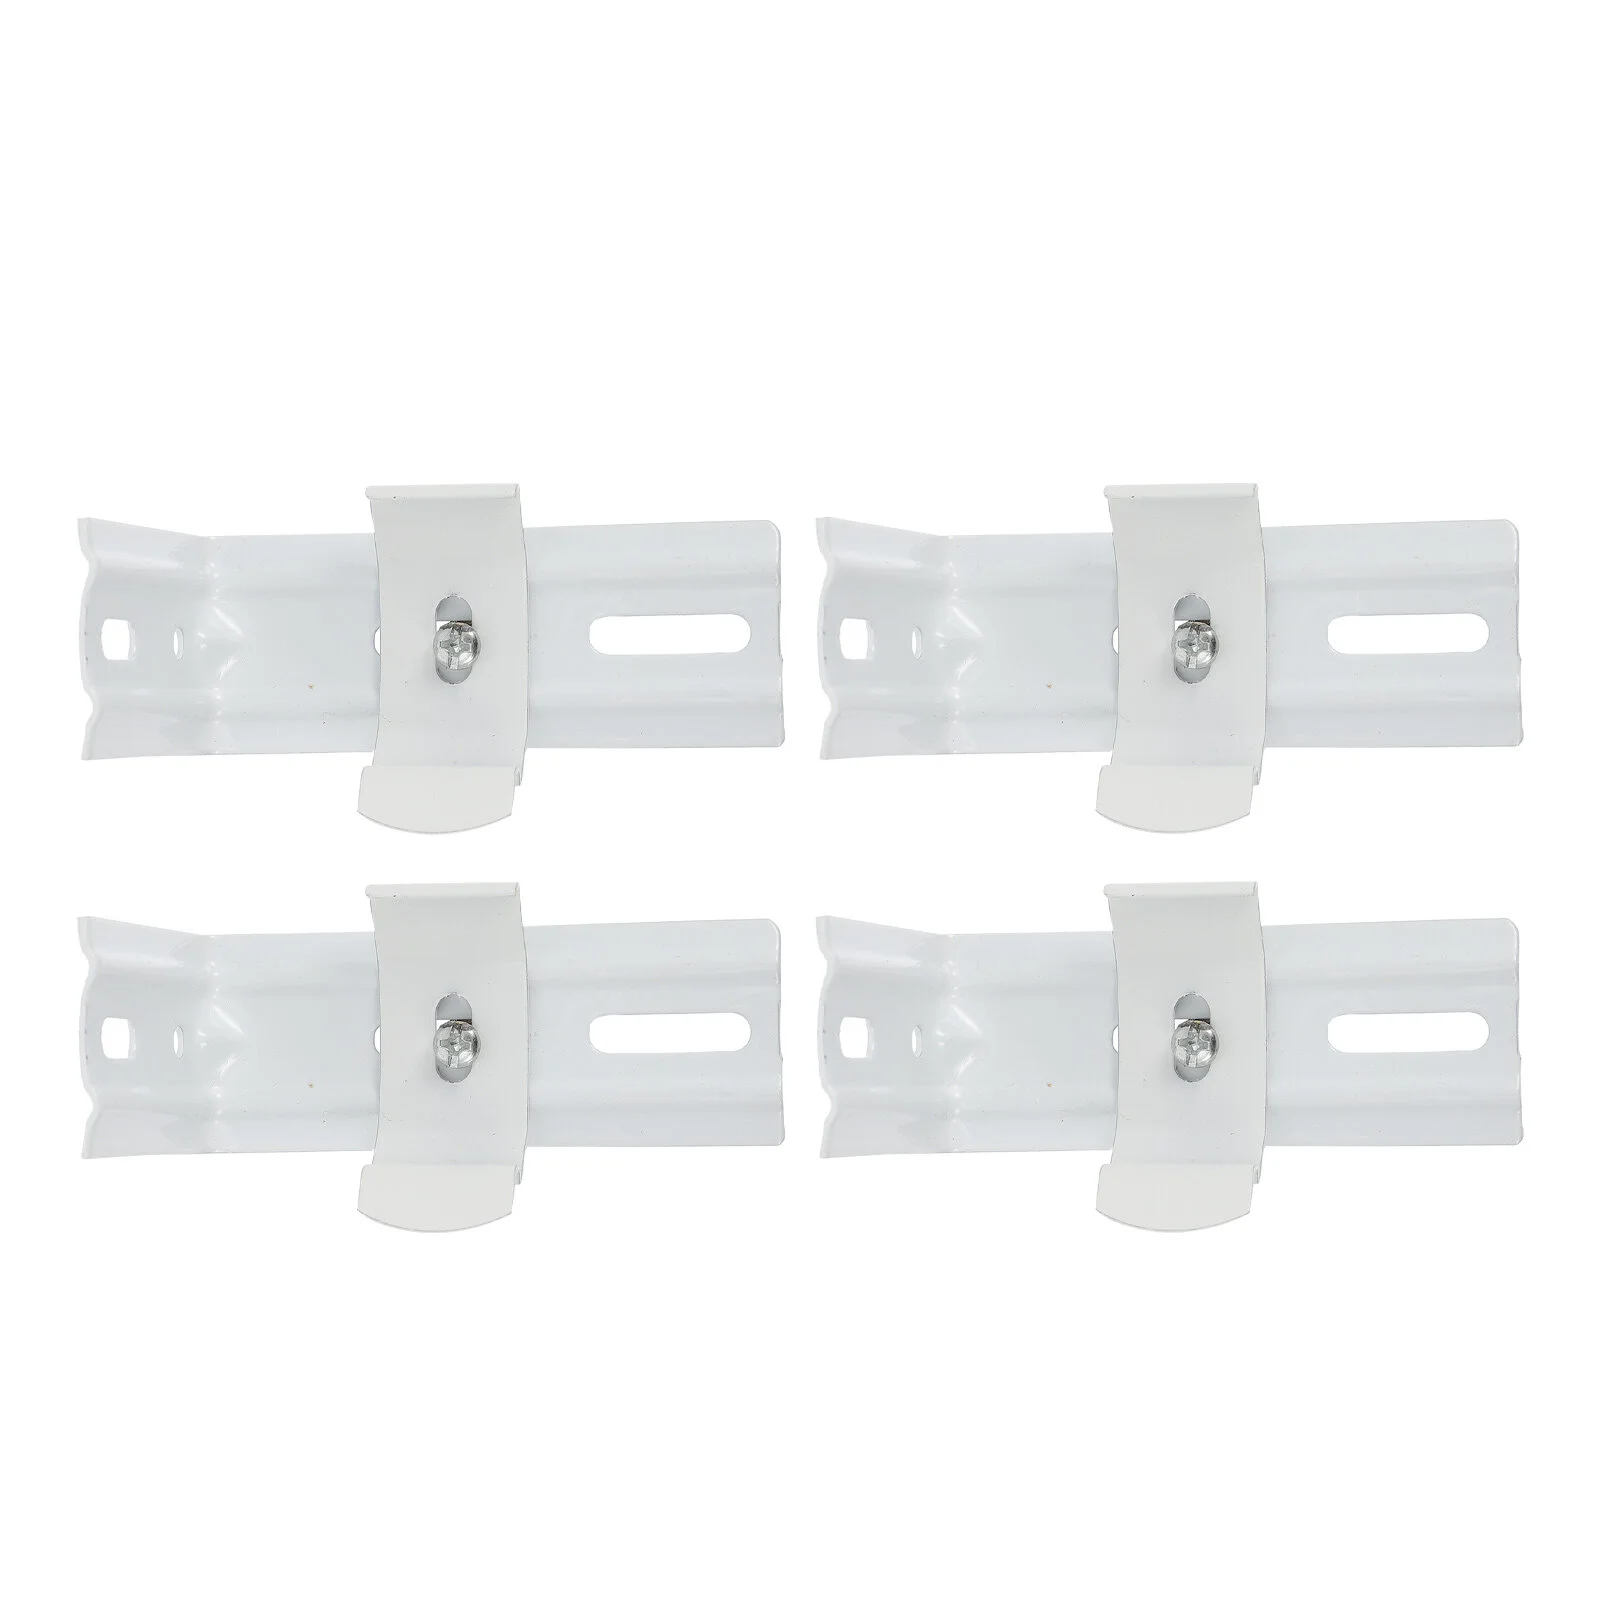 

4 Pcs Bracket L-shaped Brackets Windows Blinds Home Shelf Light Ceiling Track Tools Iron Decor Curved Rod